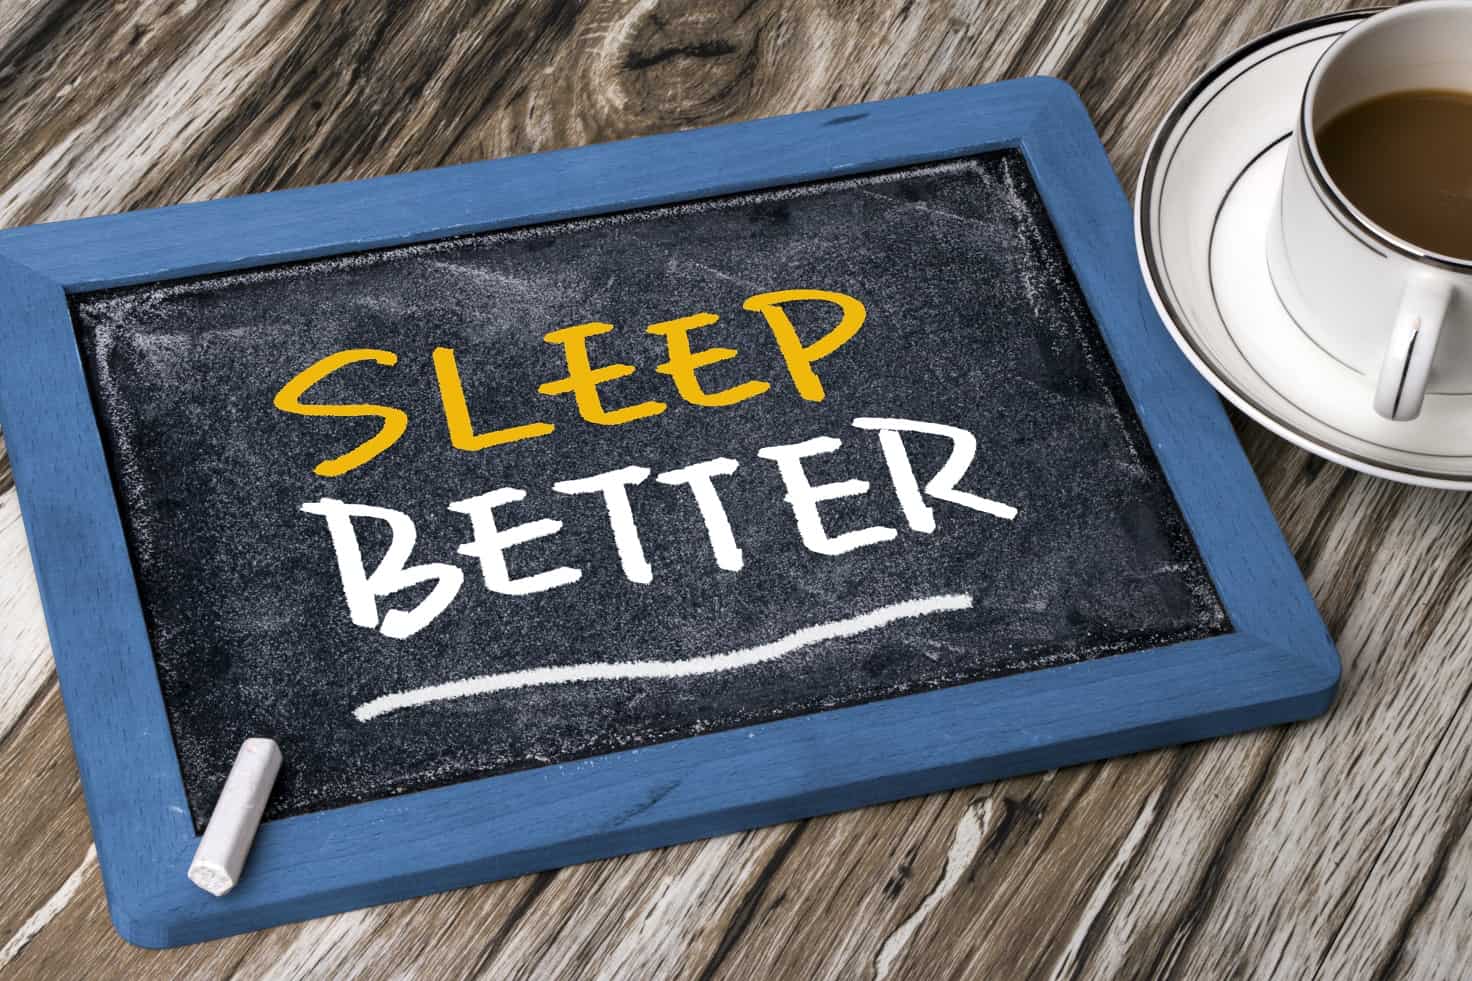 Trouble Sleeping? Here's How To Promote Better Sleep. Chalkboard